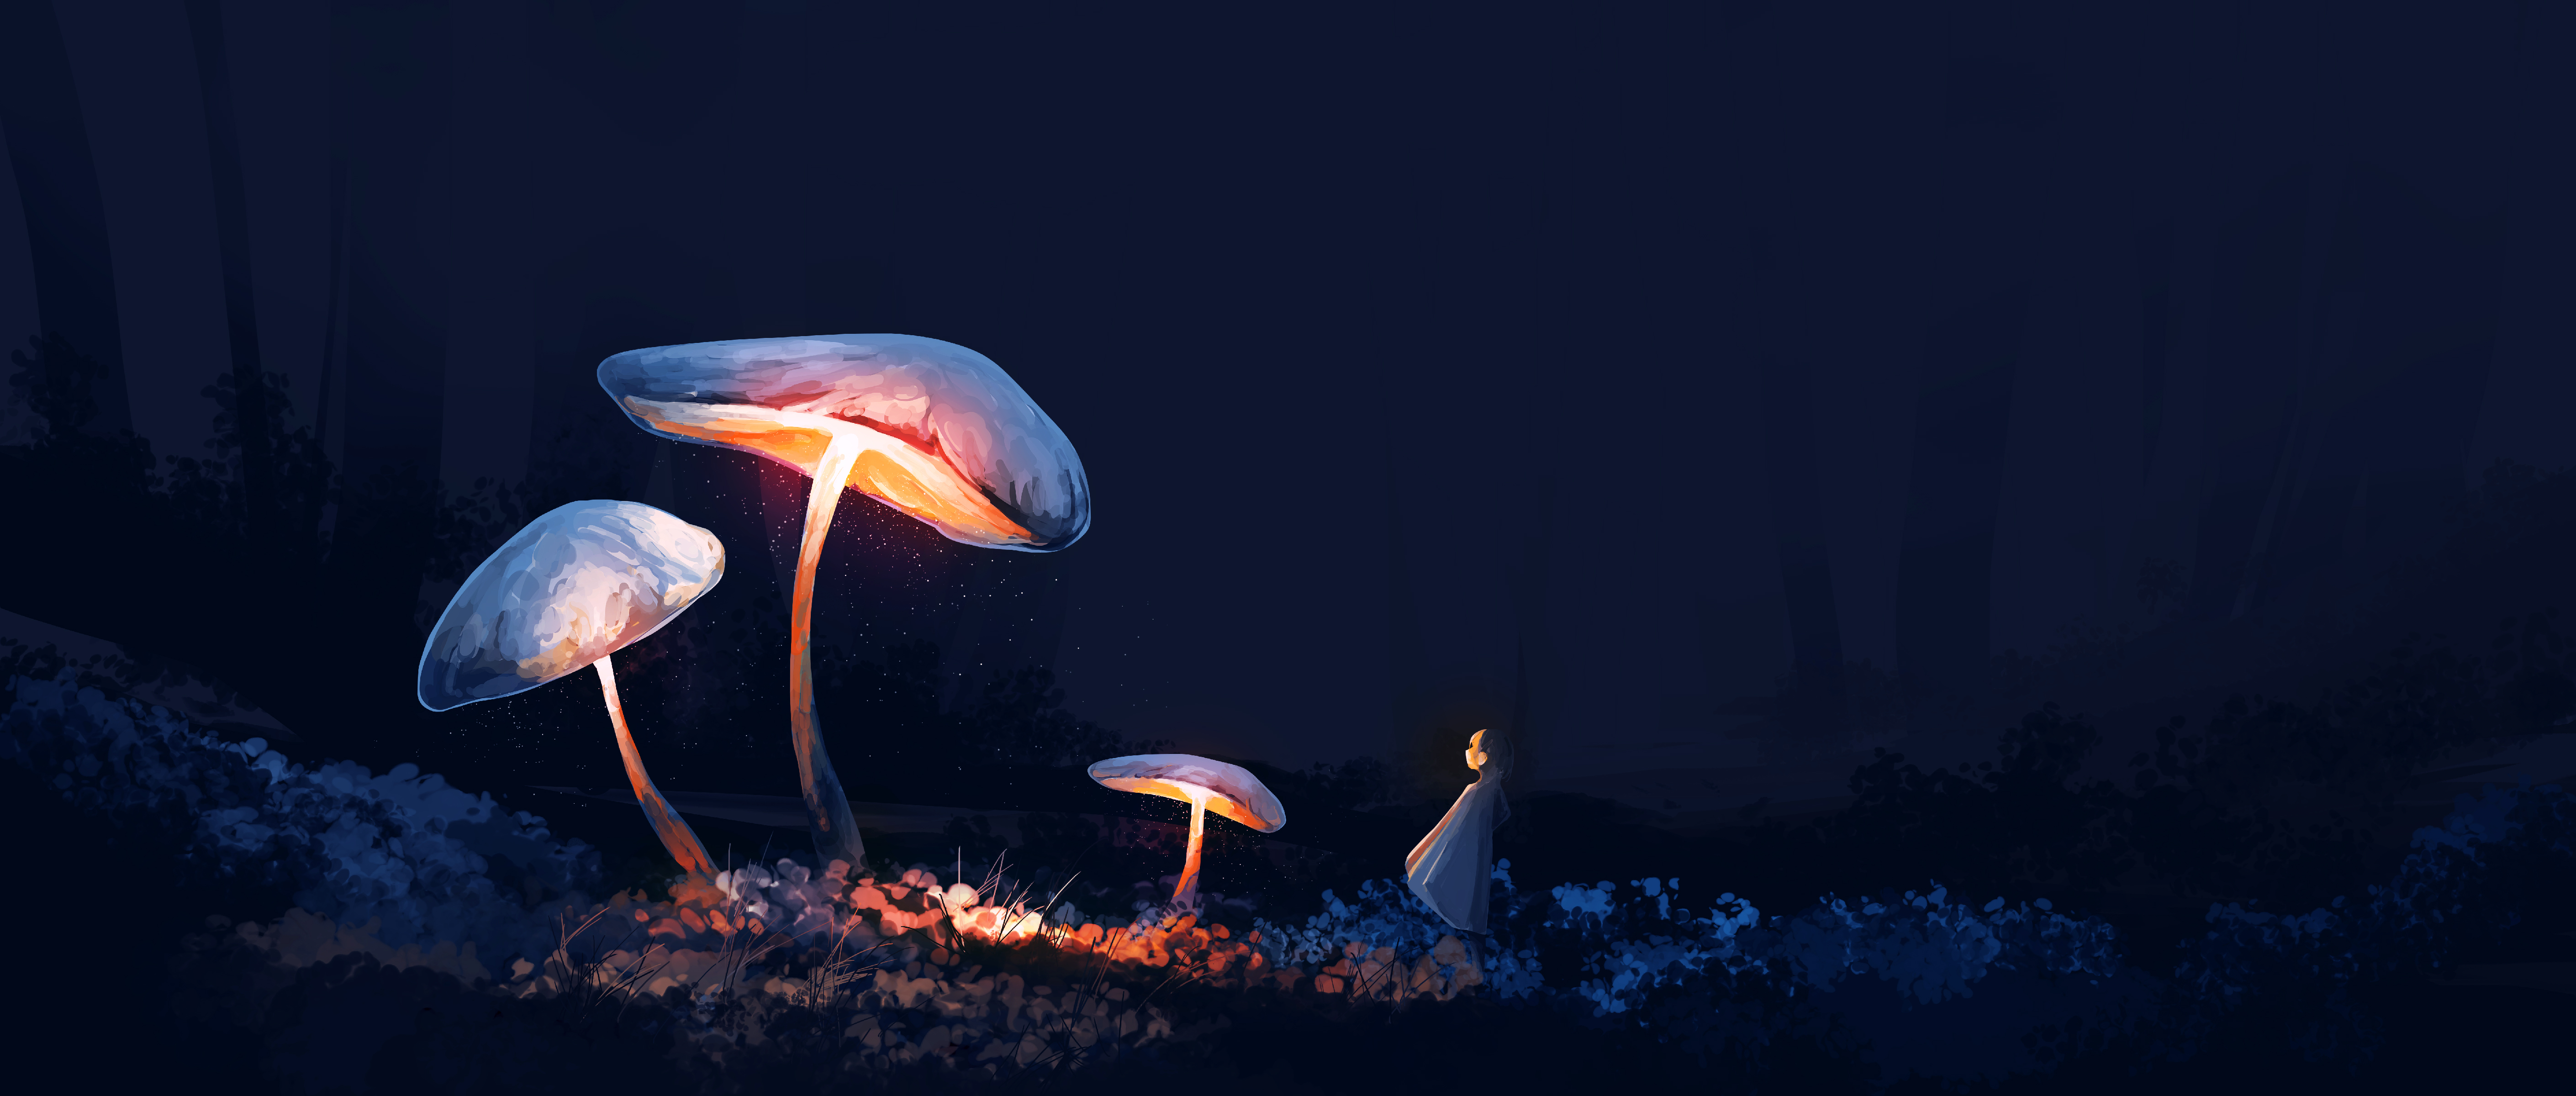 Cute Mushroom Wallpaper Hd Desktop Mushrooms  照片图像